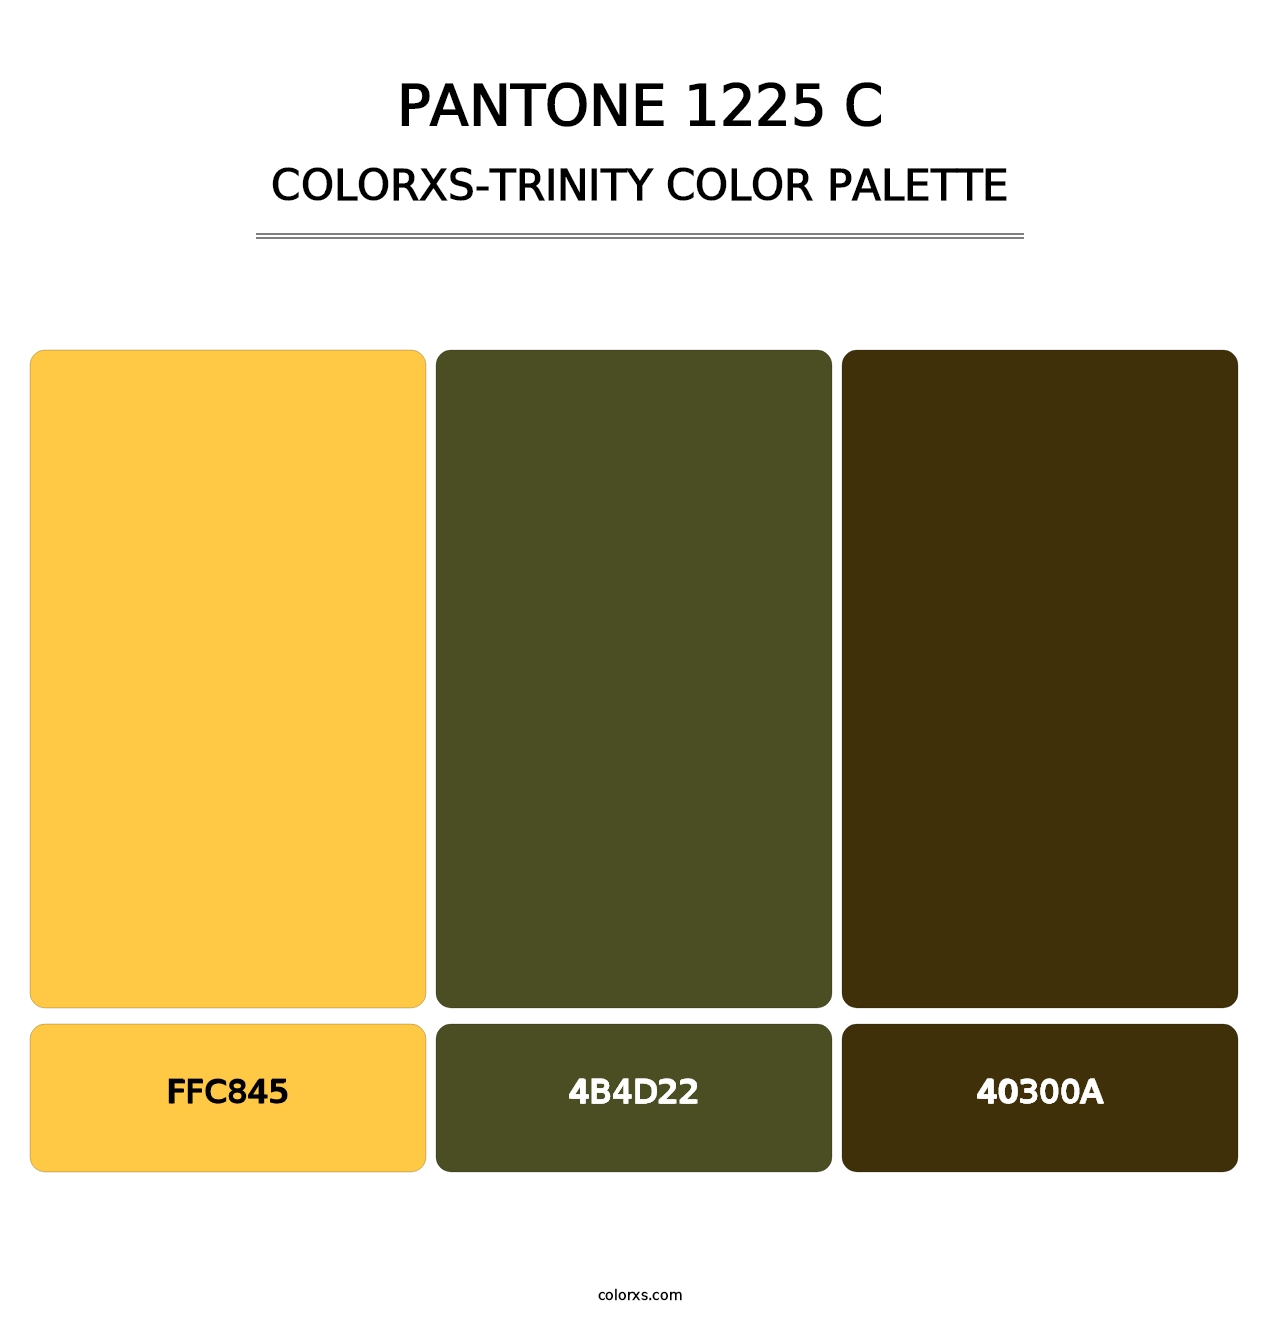 PANTONE 1225 C - Colorxs Trinity Palette